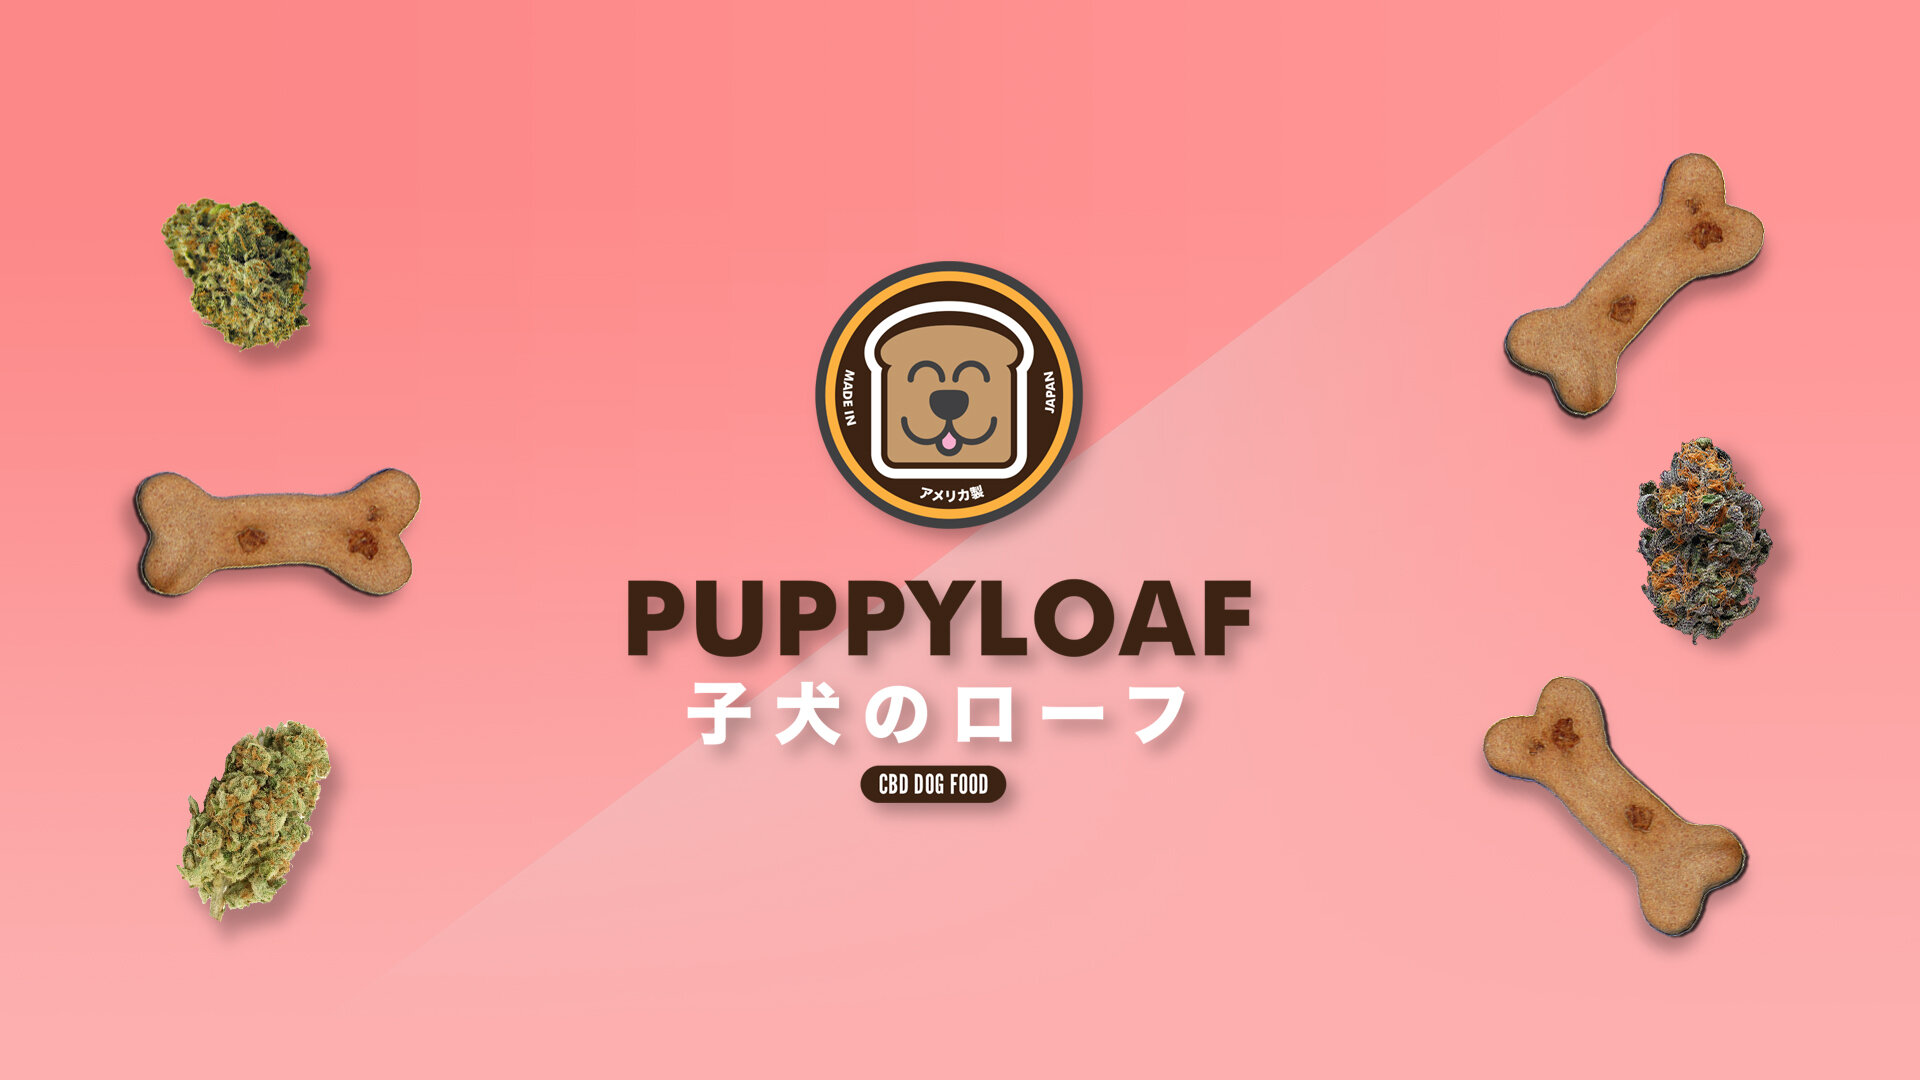 Puppyloaf-Full-Bleed-01.jpg